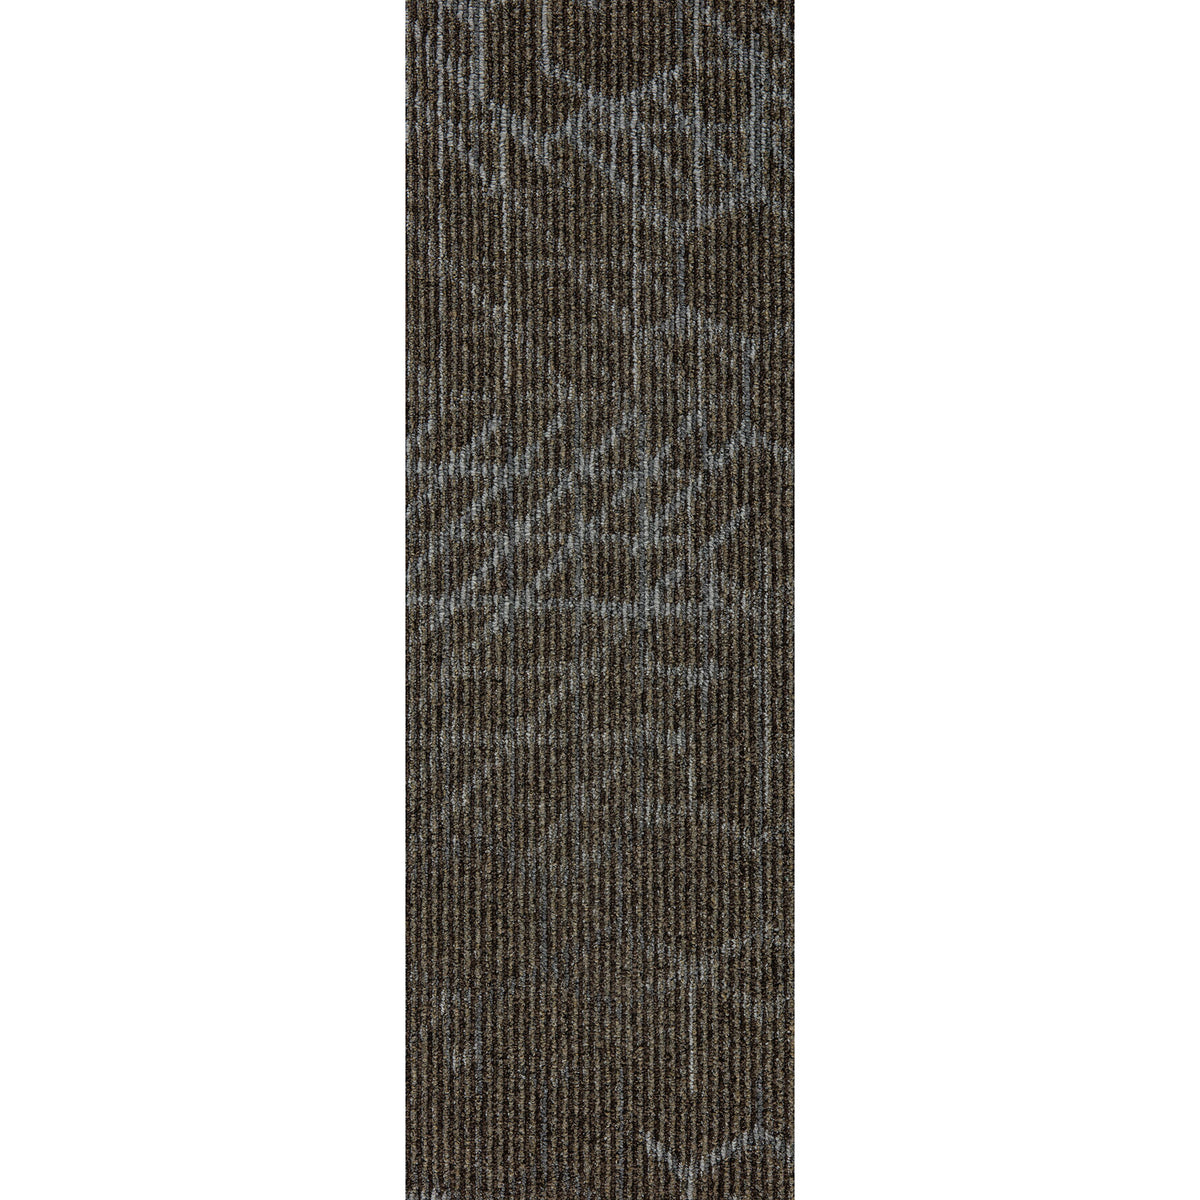 Mohawk Group - Visual Edge Angled Perception Carpet Tile - Rustic Taupe